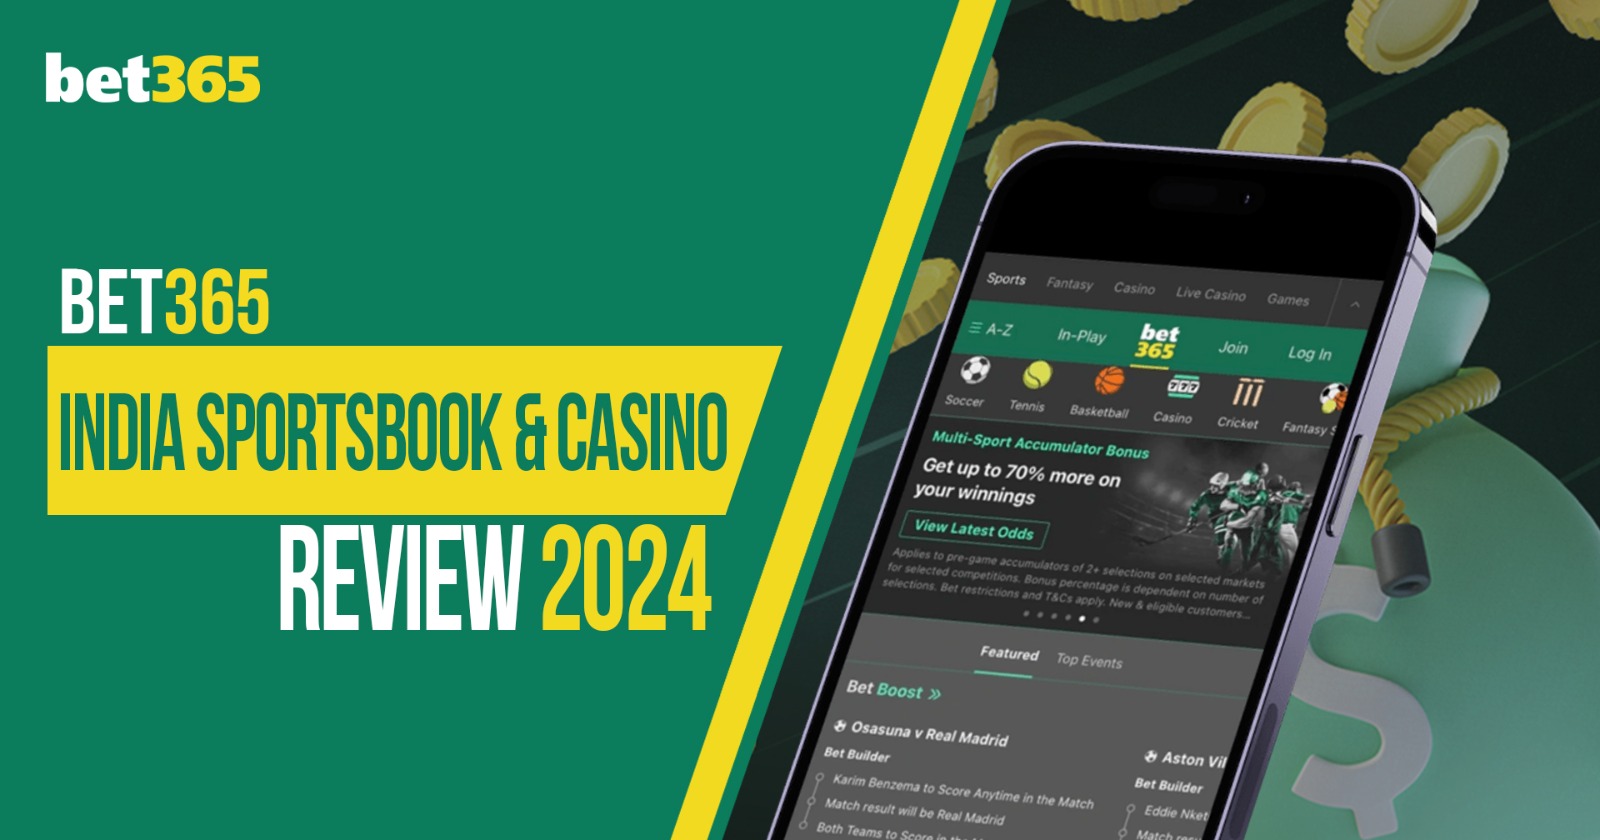 Bet365 Sportsbook & Casino Review 2024